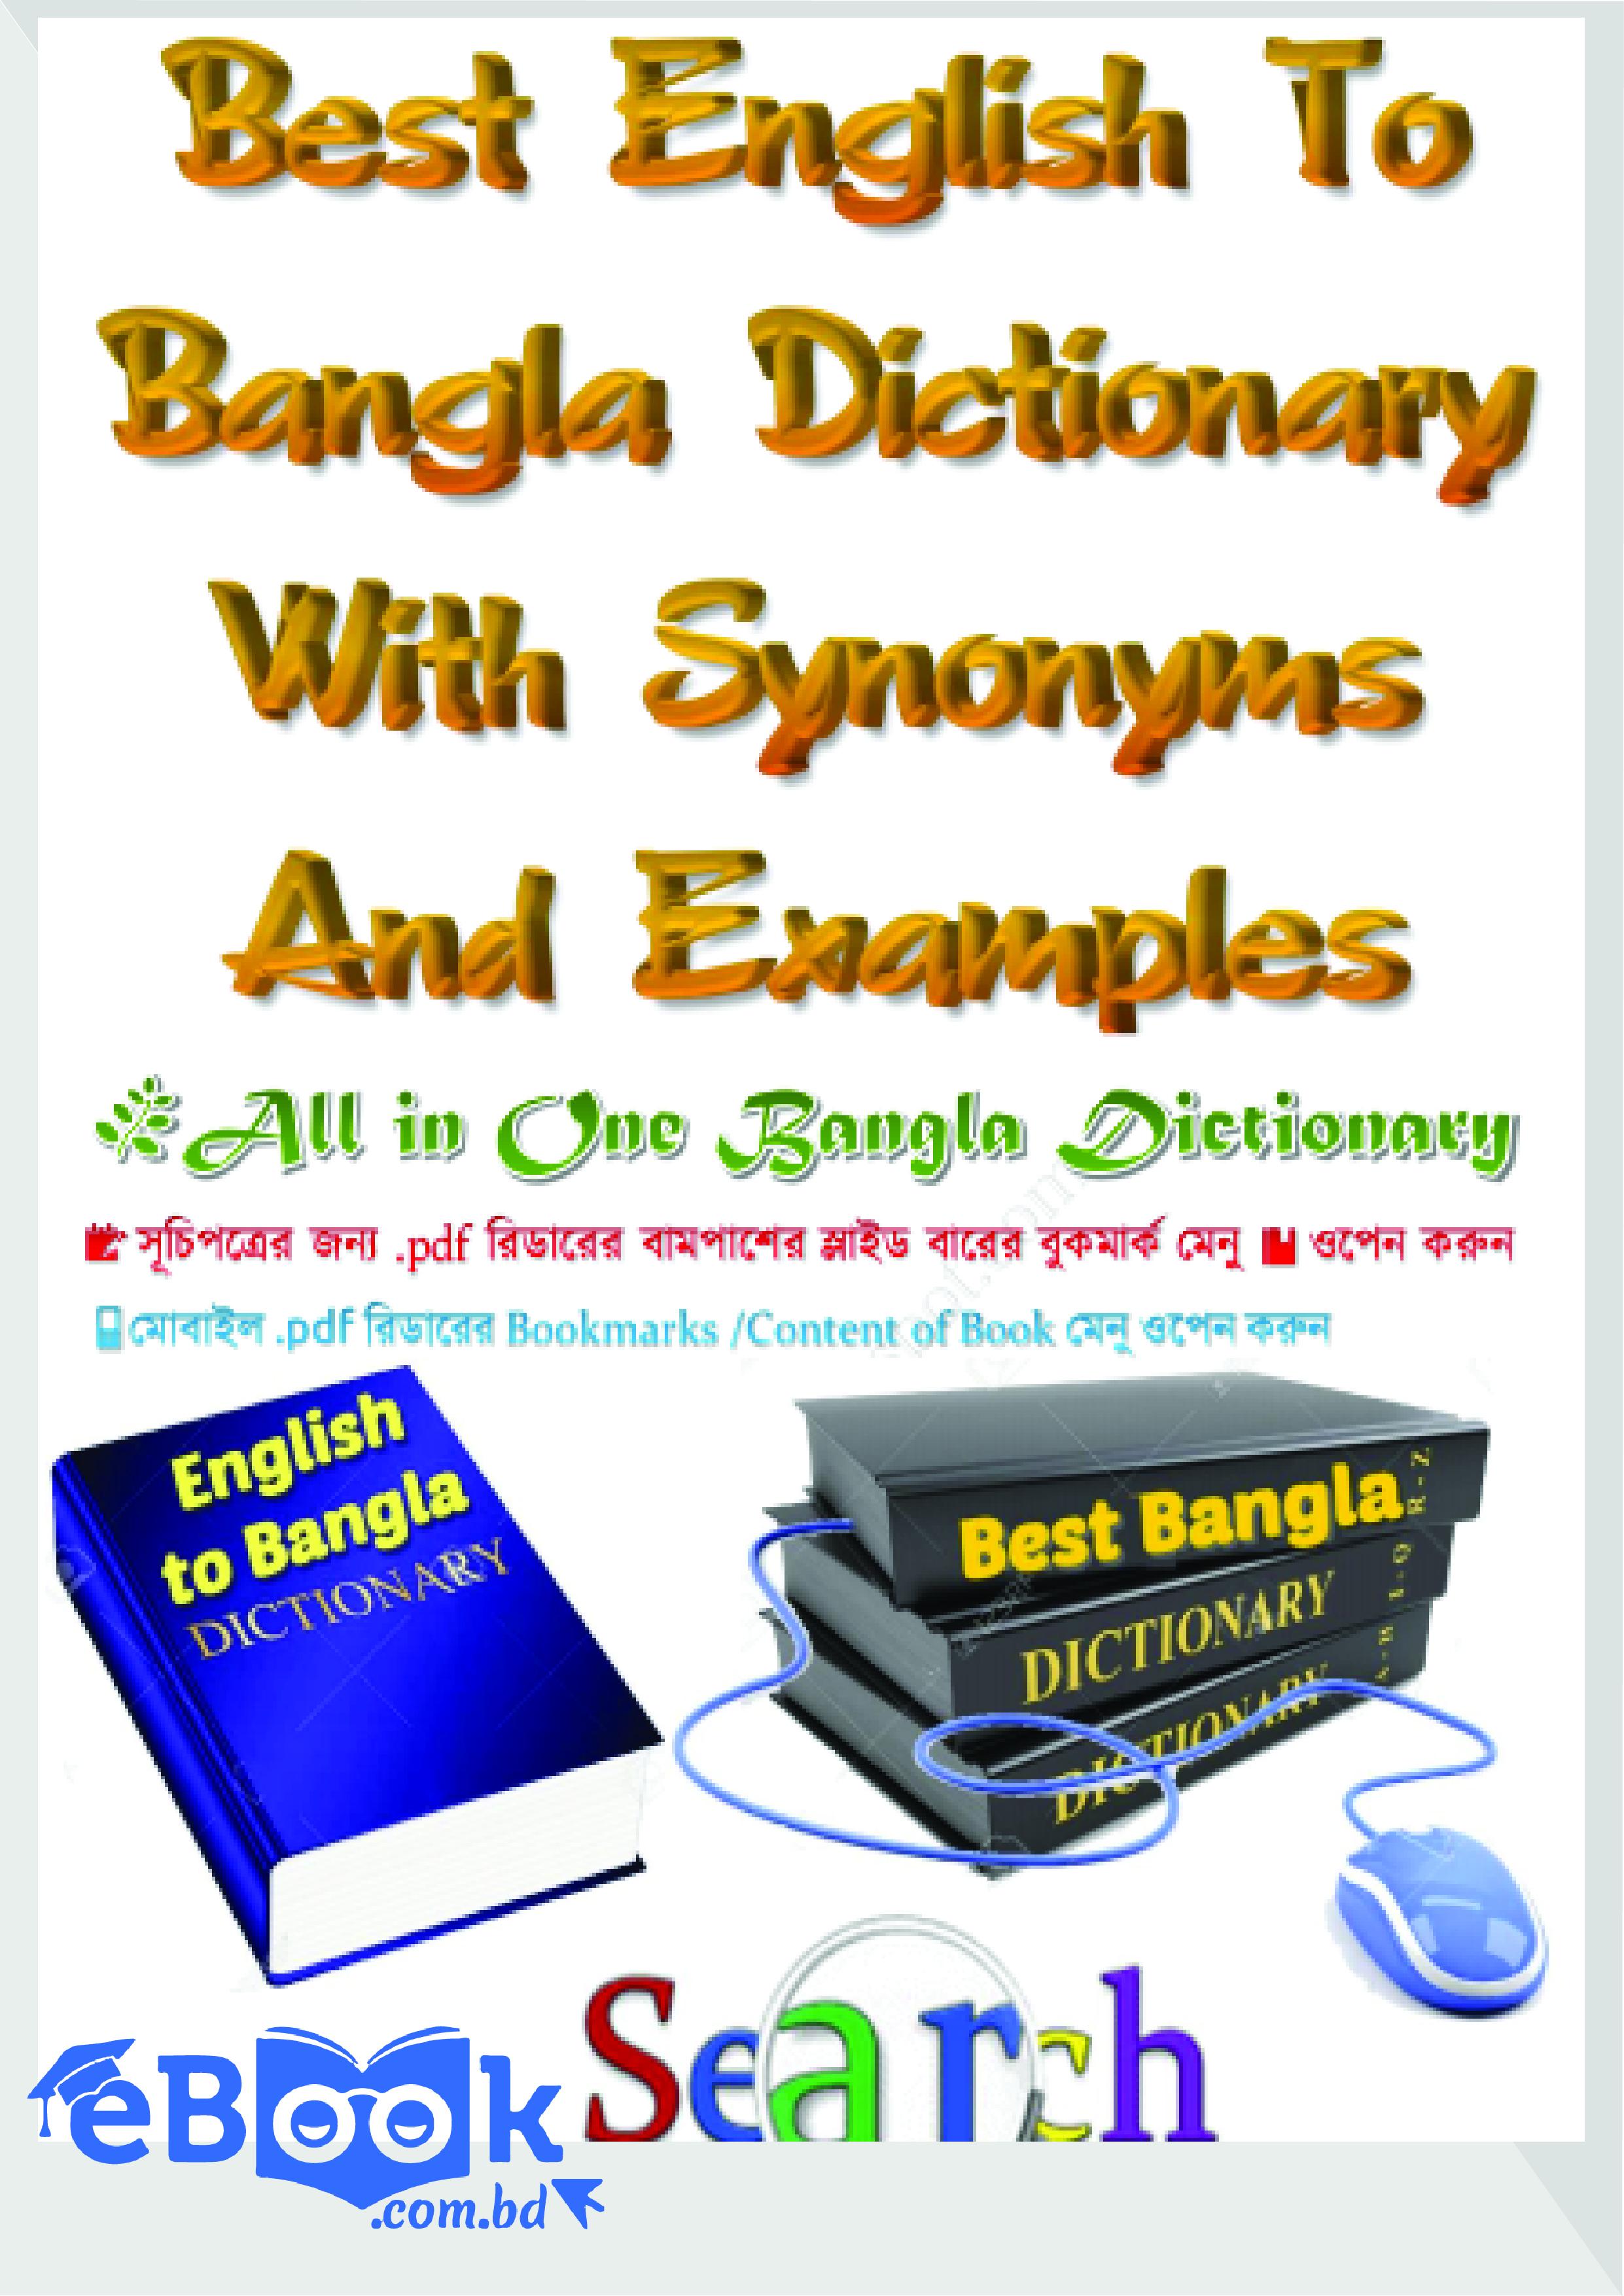 Best English To Bangla Dictionary With Synonyms And Examples - সেরা ইংরেজি থেকে বাংলা অভিধান সাথে একীধরনের শব্দের অর্থ এবং উদাহরণ